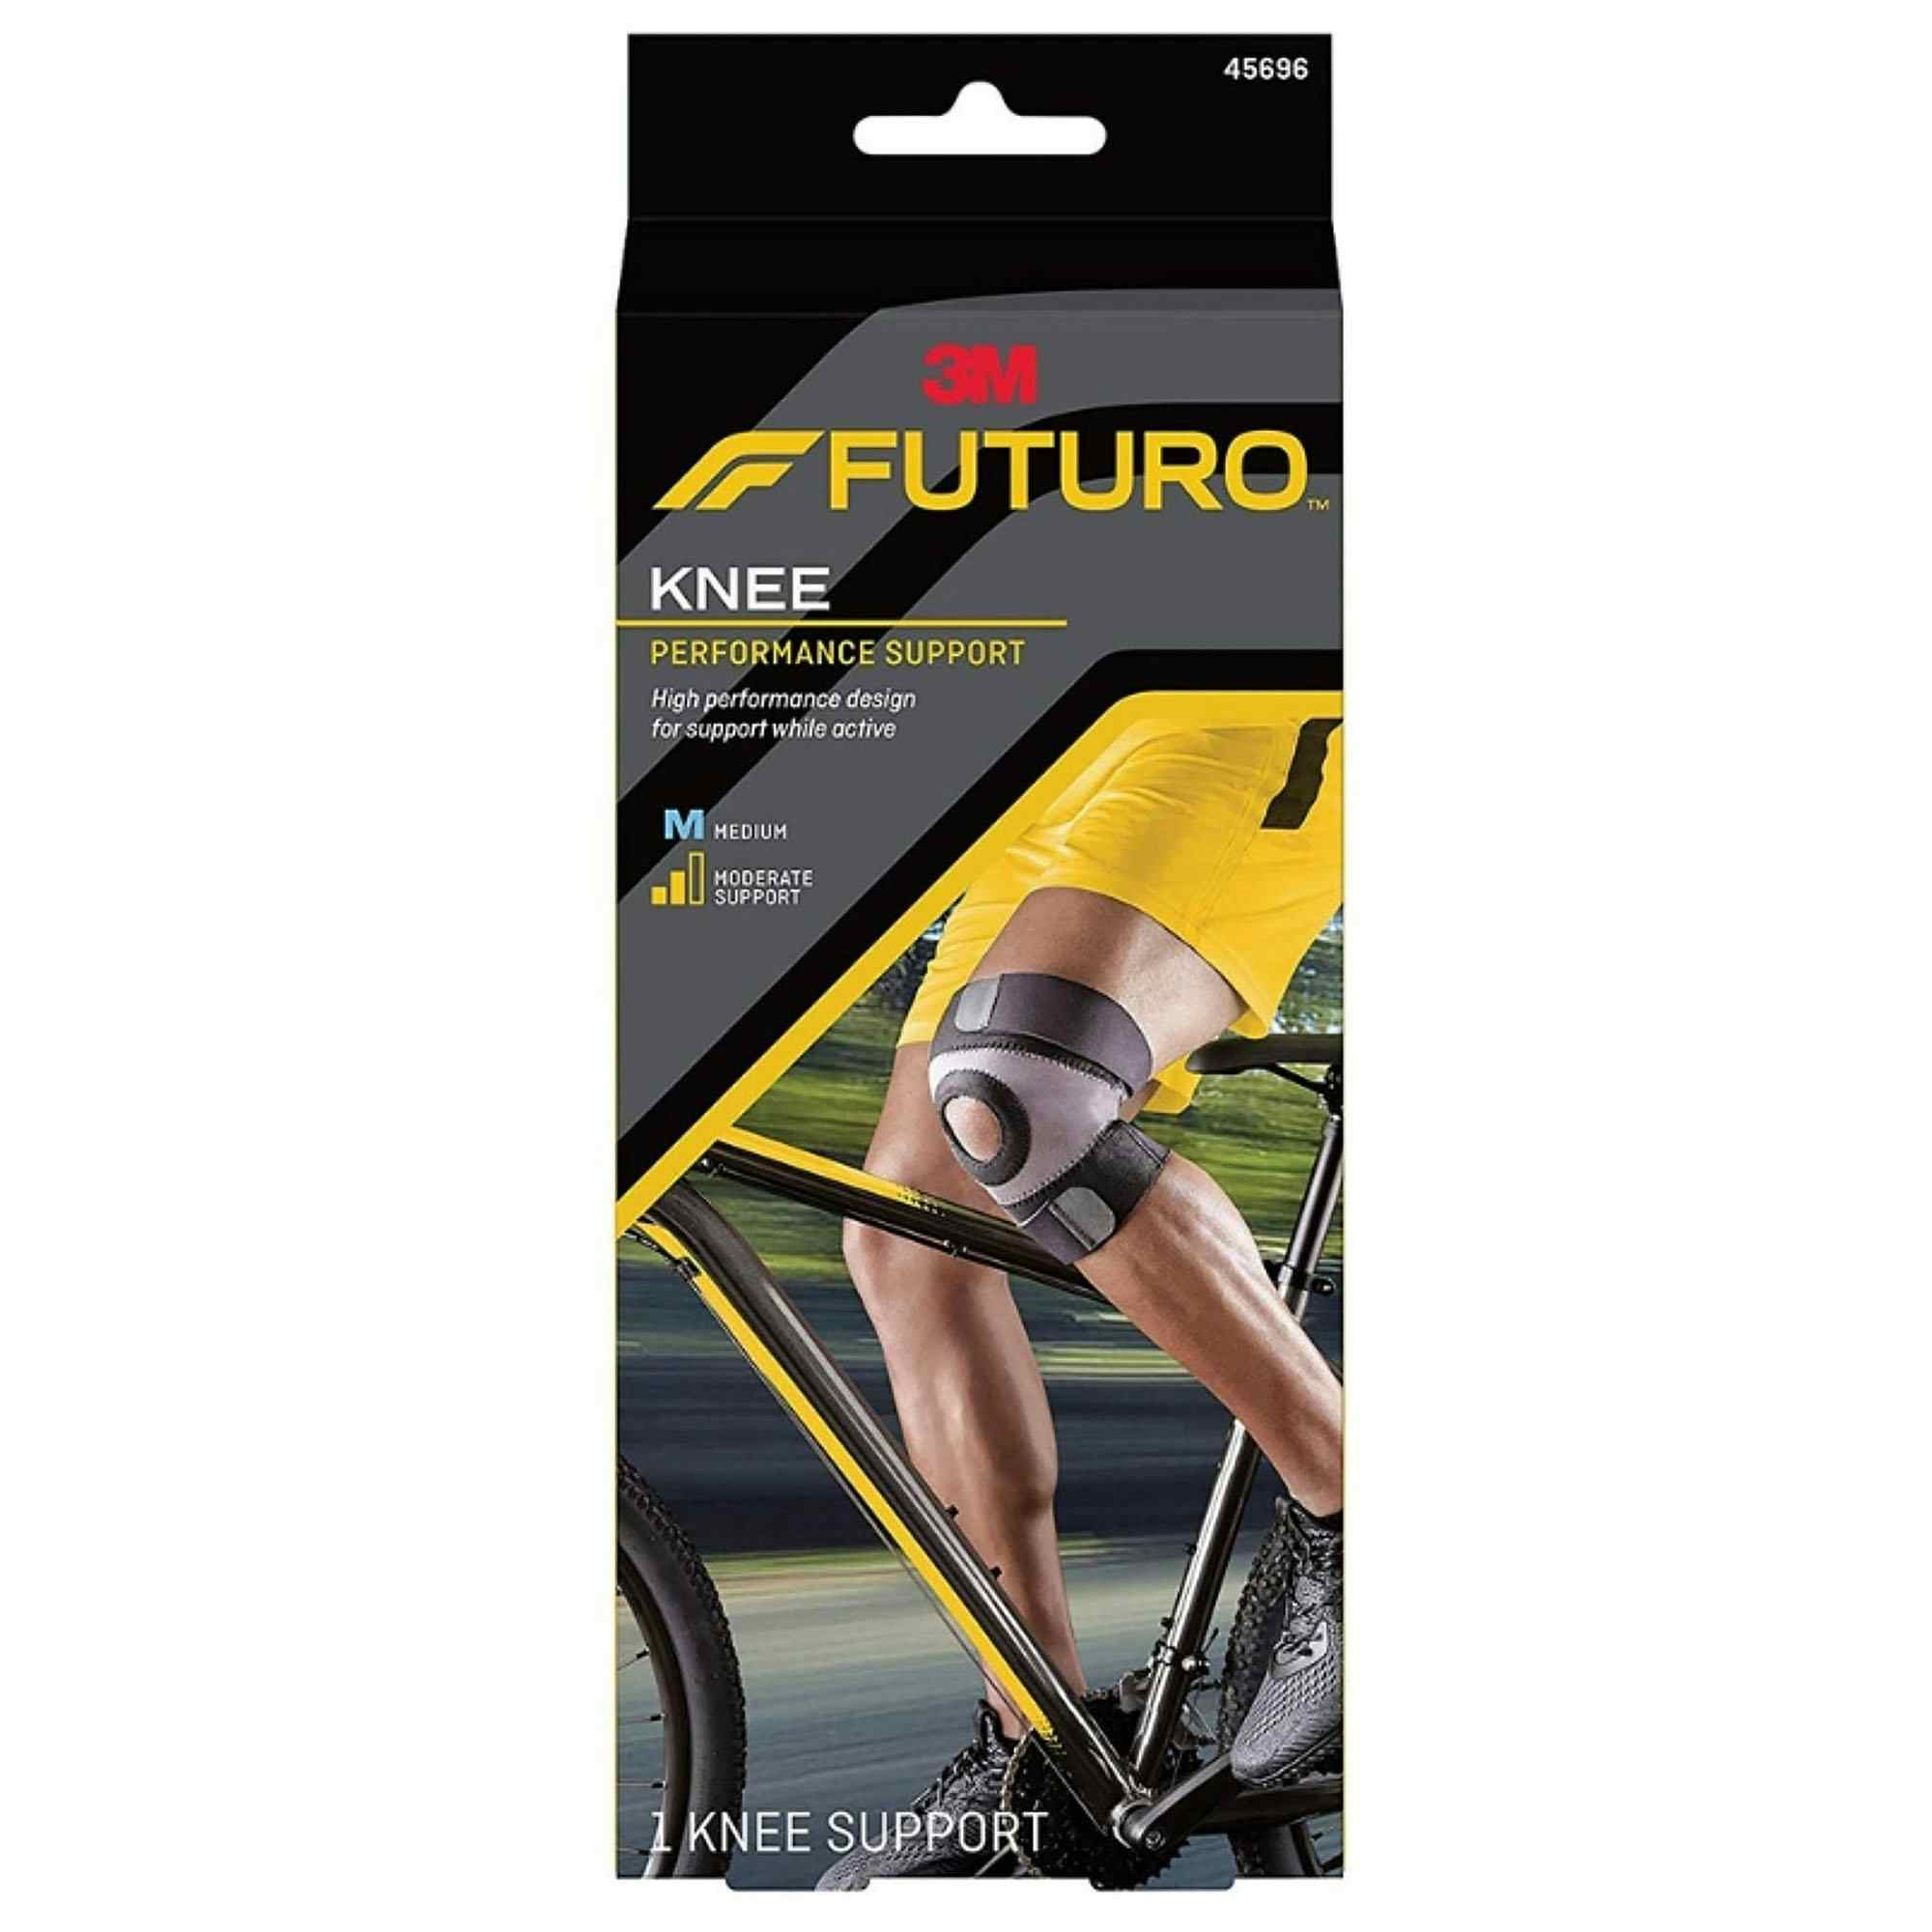 3M Futuro Knee Performance Support, 45696ENR, Medium (15-17") - Box of 3